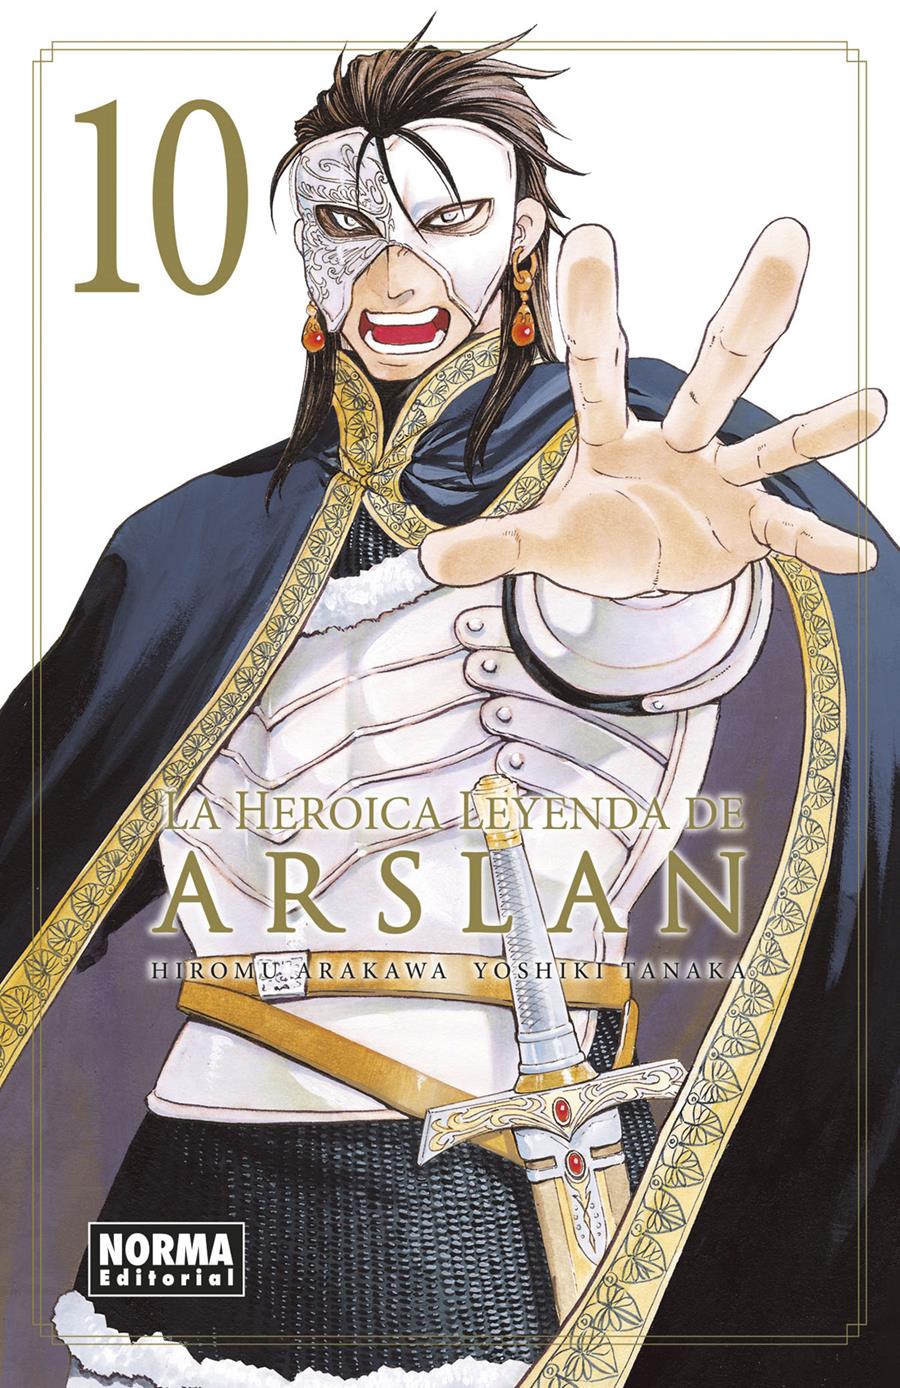 La heroica leyenda de Arslan 10 | N1219-NOR29 | Yoshiki Tanaka, Hiromu Arakawa | Terra de Còmic - Tu tienda de cómics online especializada en cómics, manga y merchandising